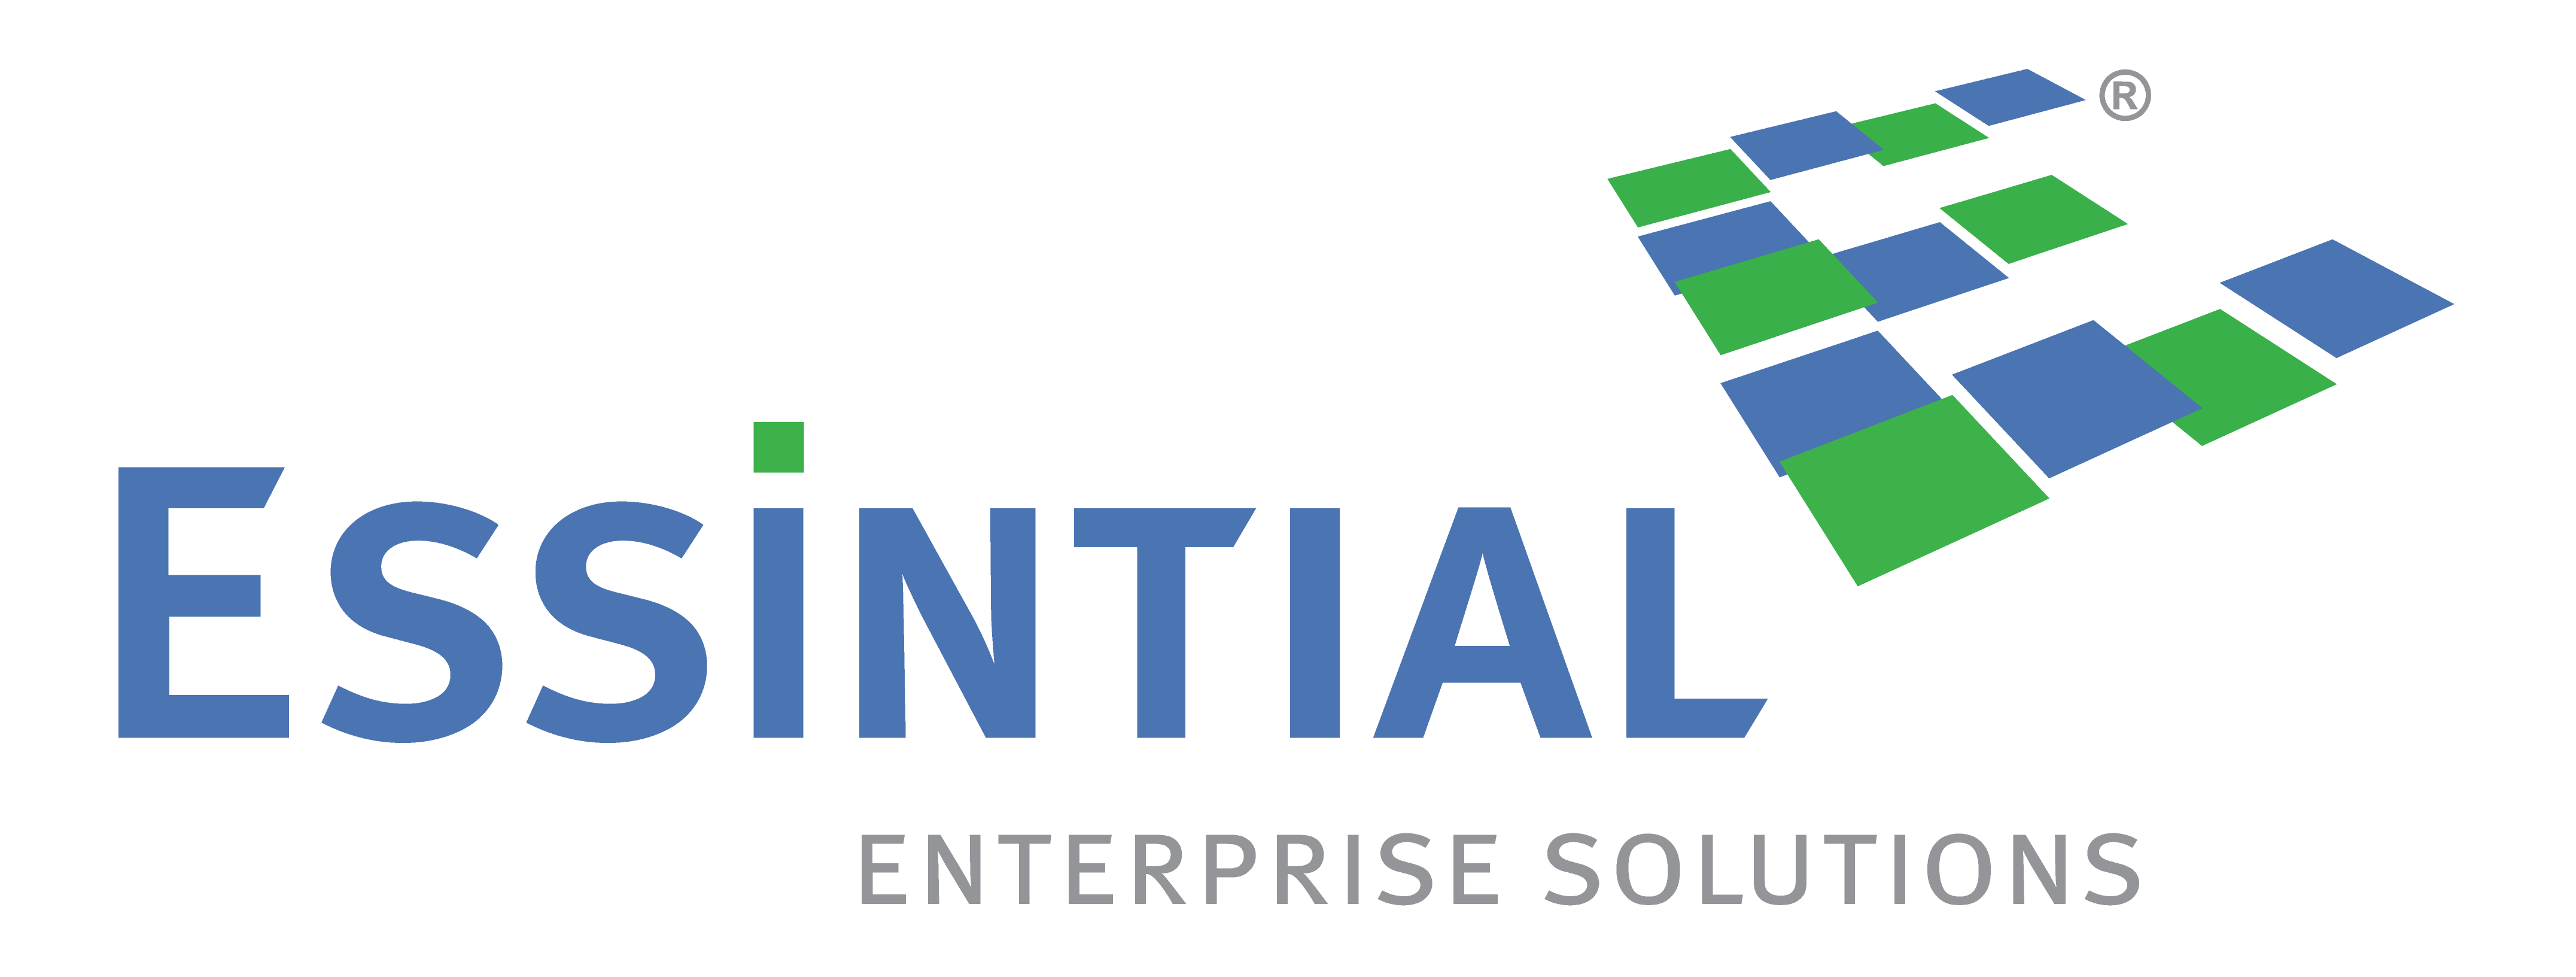 Essintial Enterprise Solutions